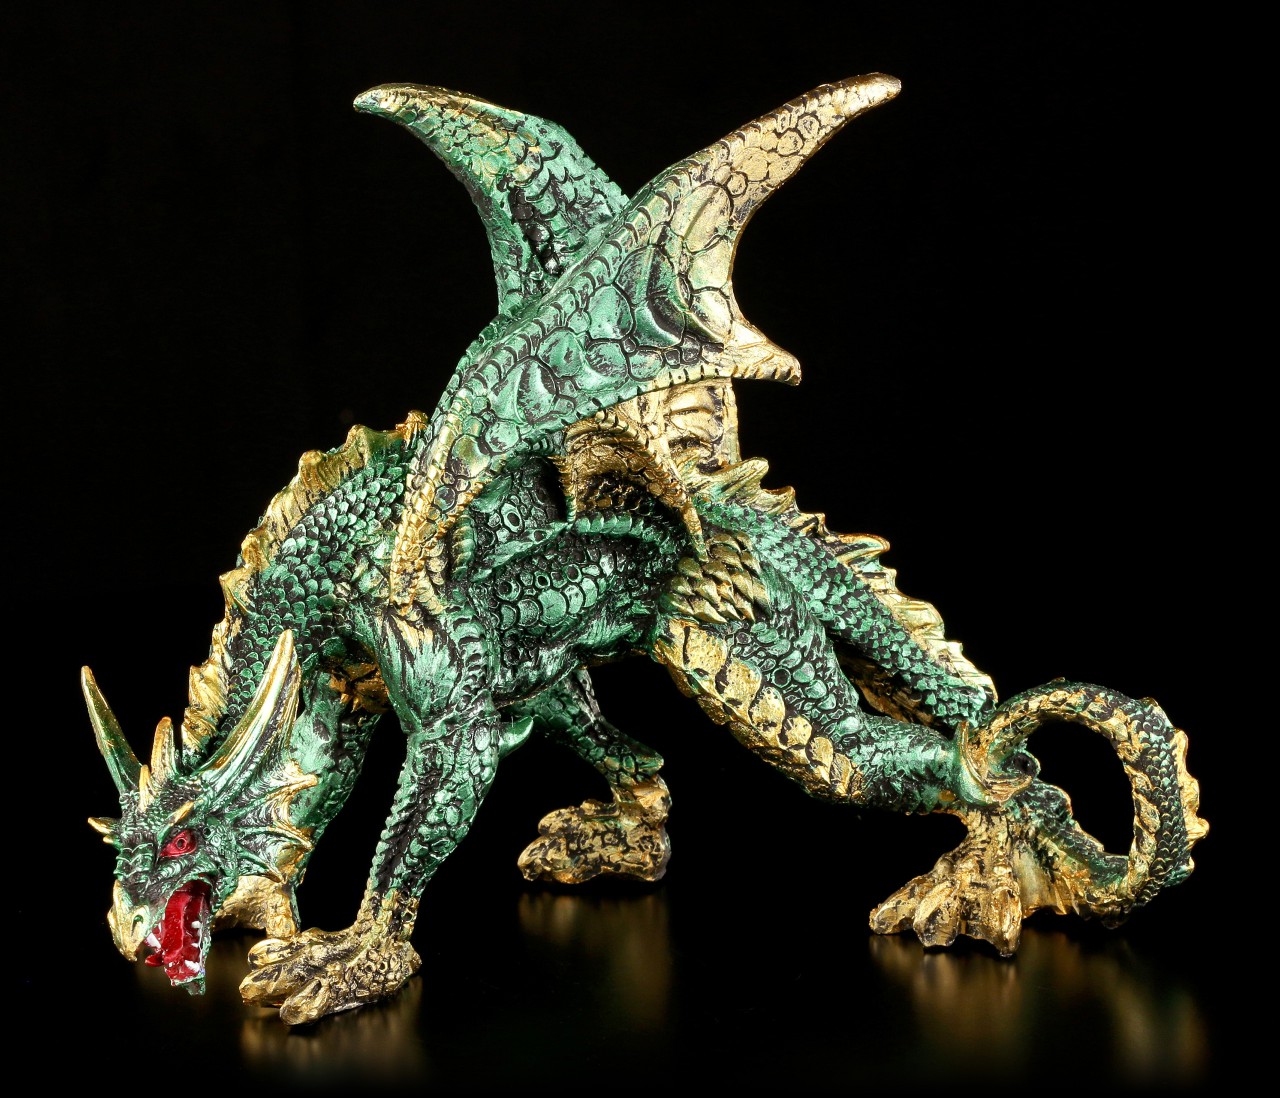 Dragon Figurine green - Emerald Creeper